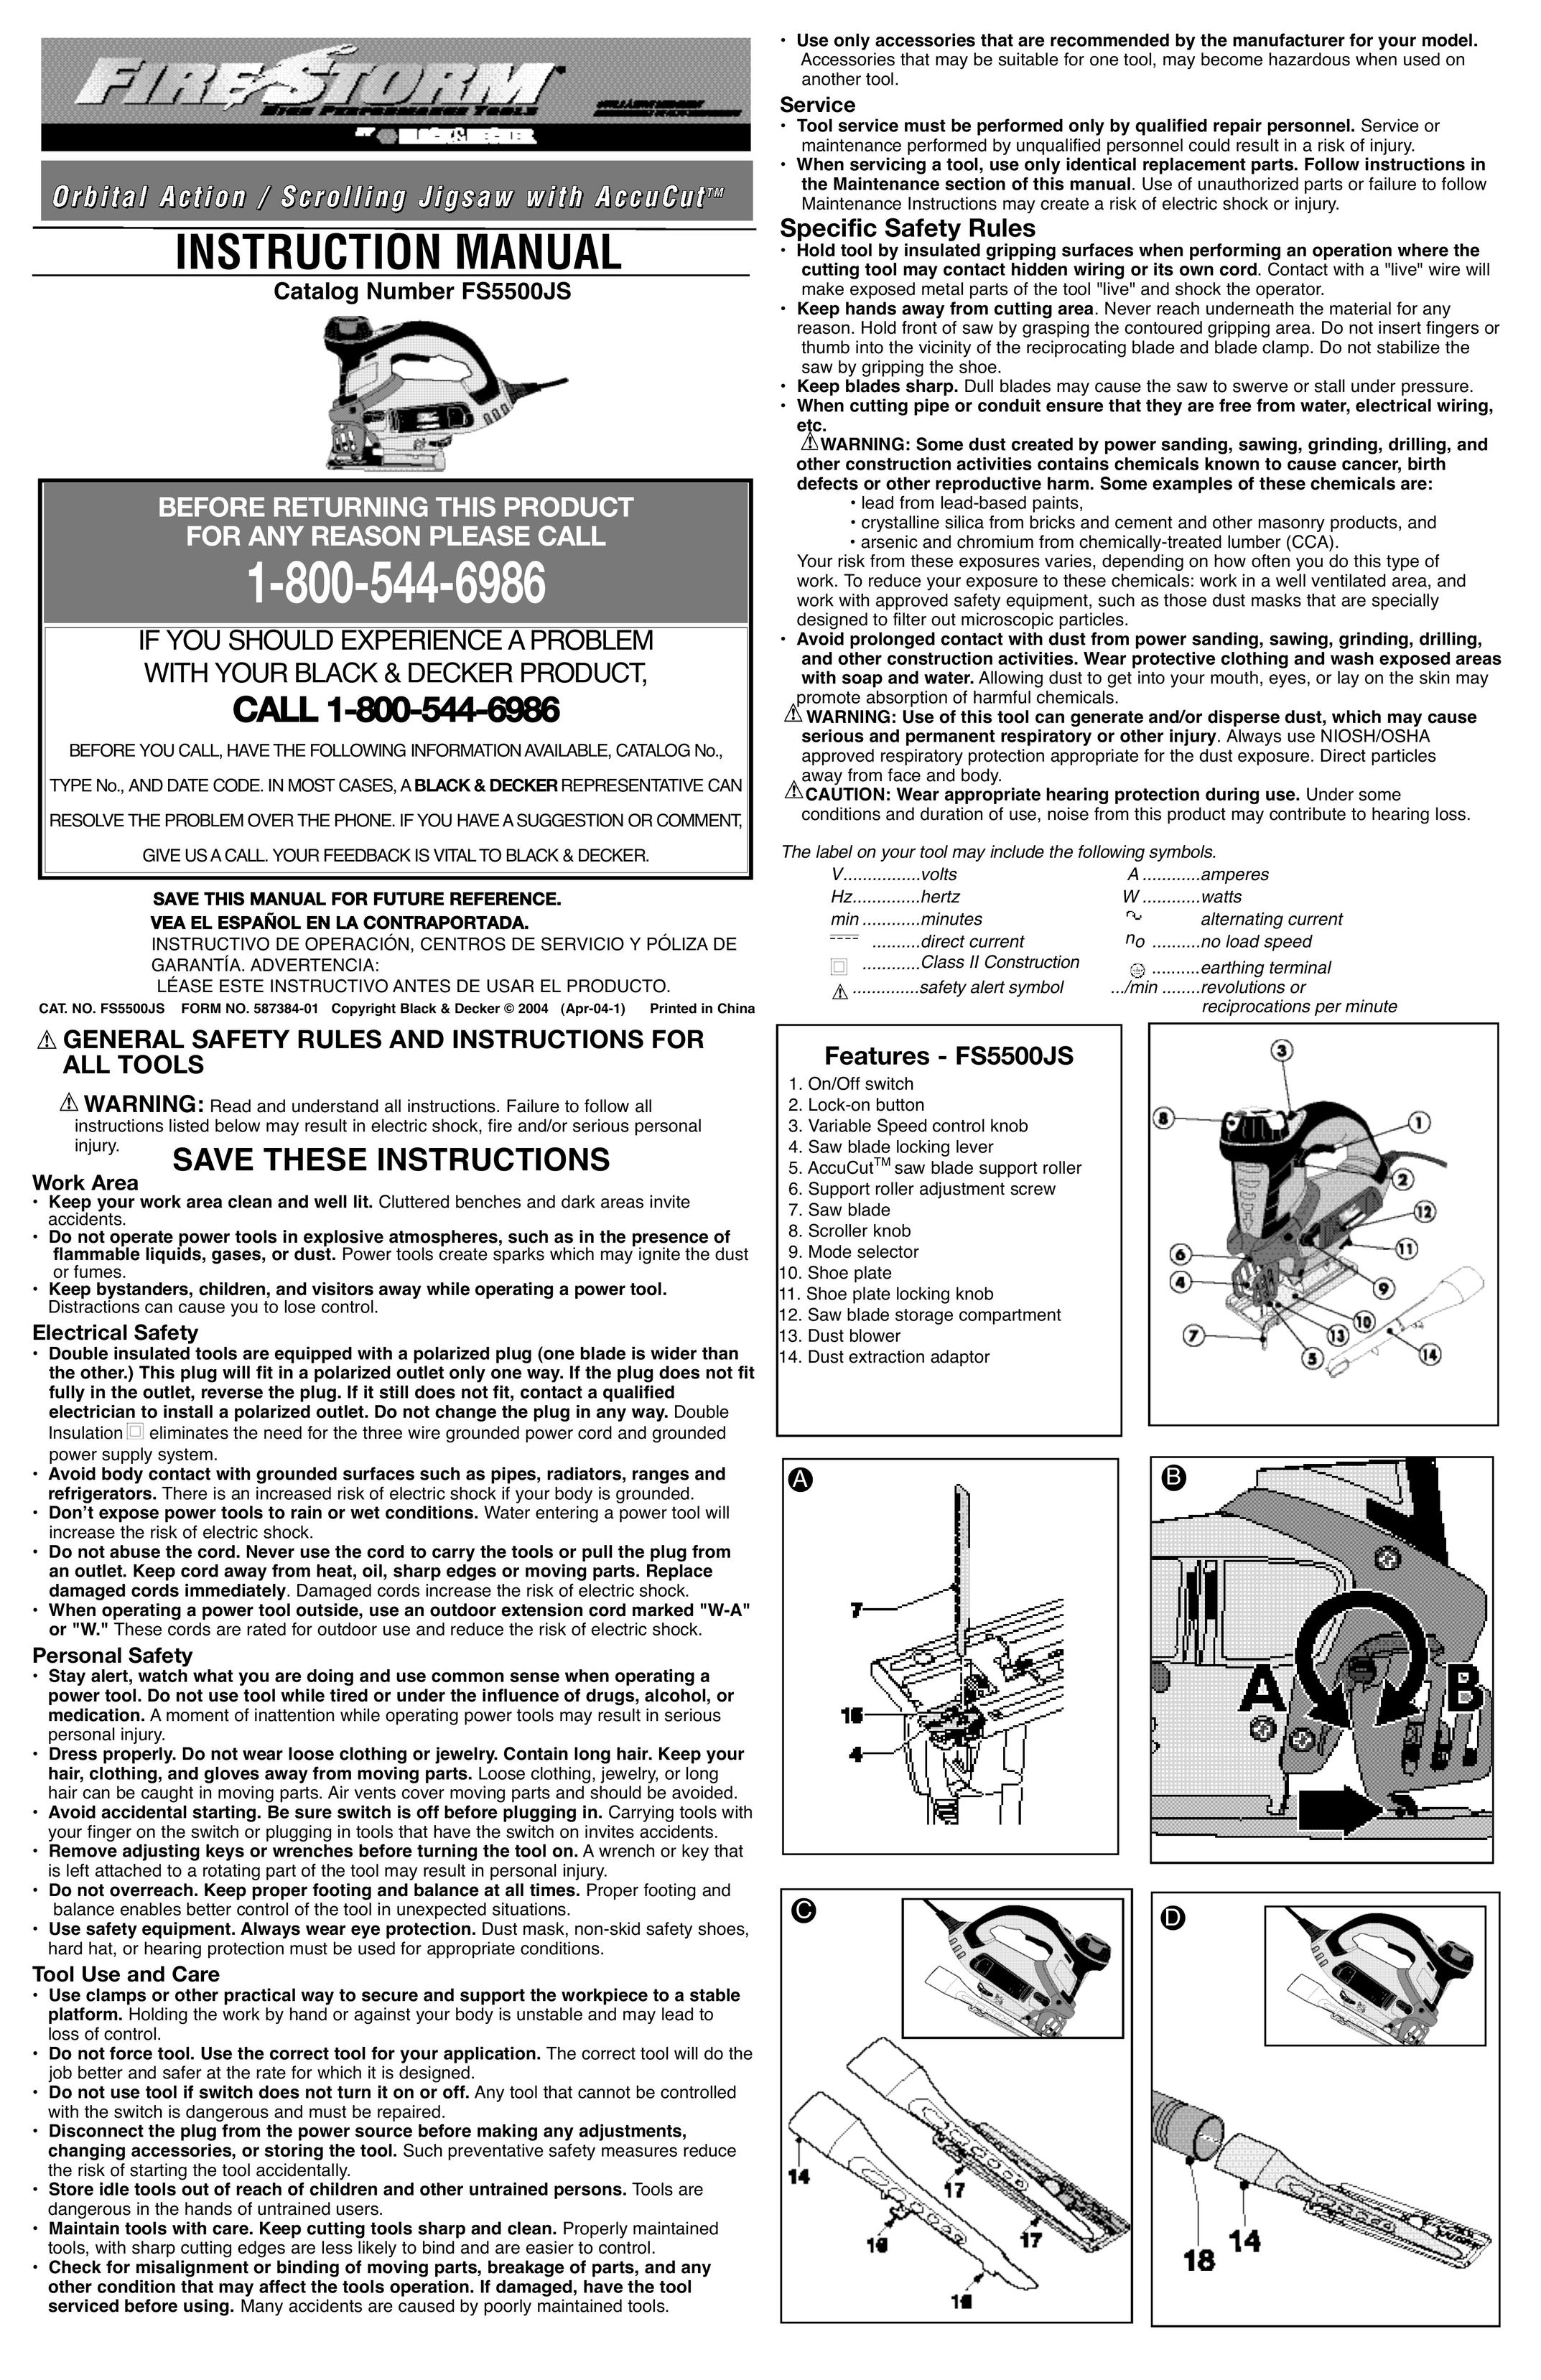 Black & Decker 587384-01 Saw User Manual